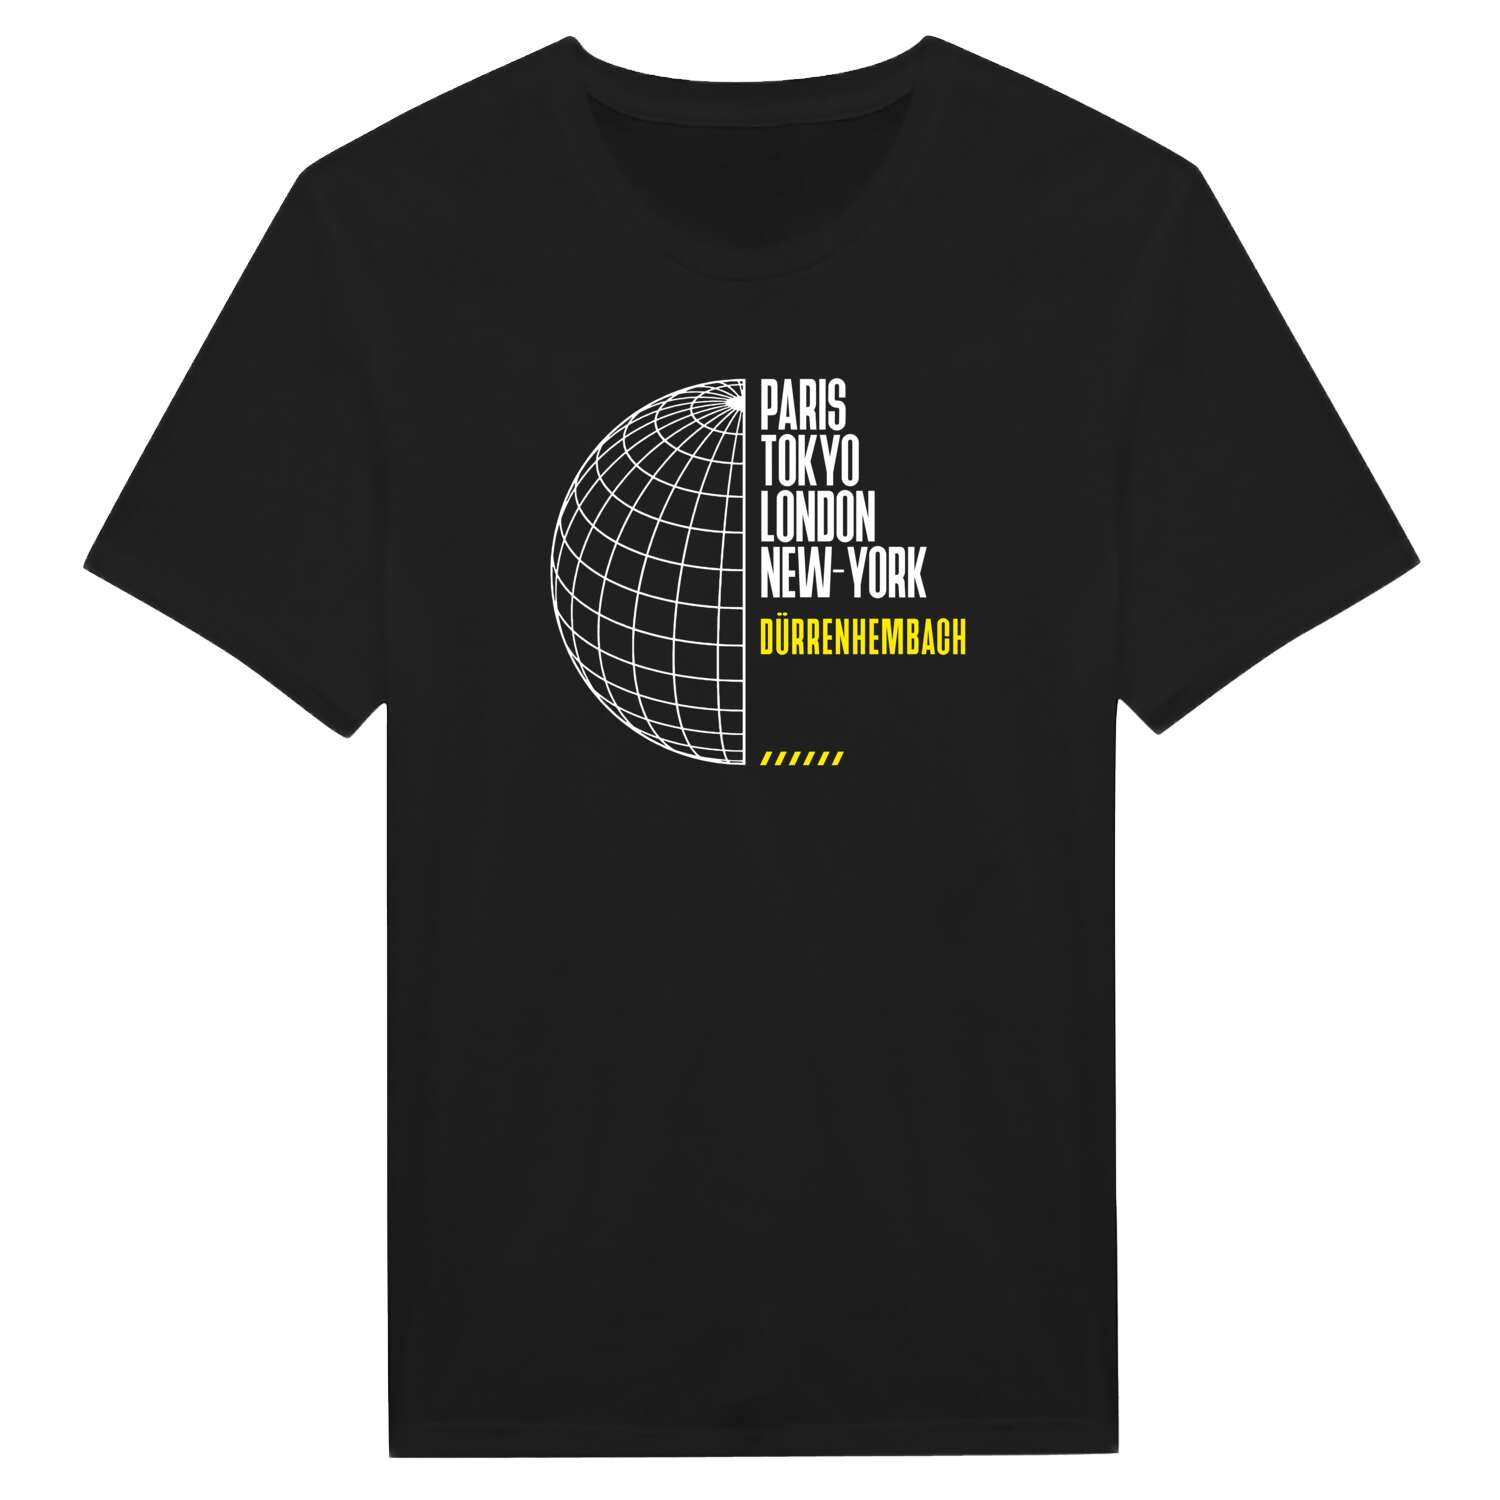 Dürrenhembach T-Shirt »Paris Tokyo London«